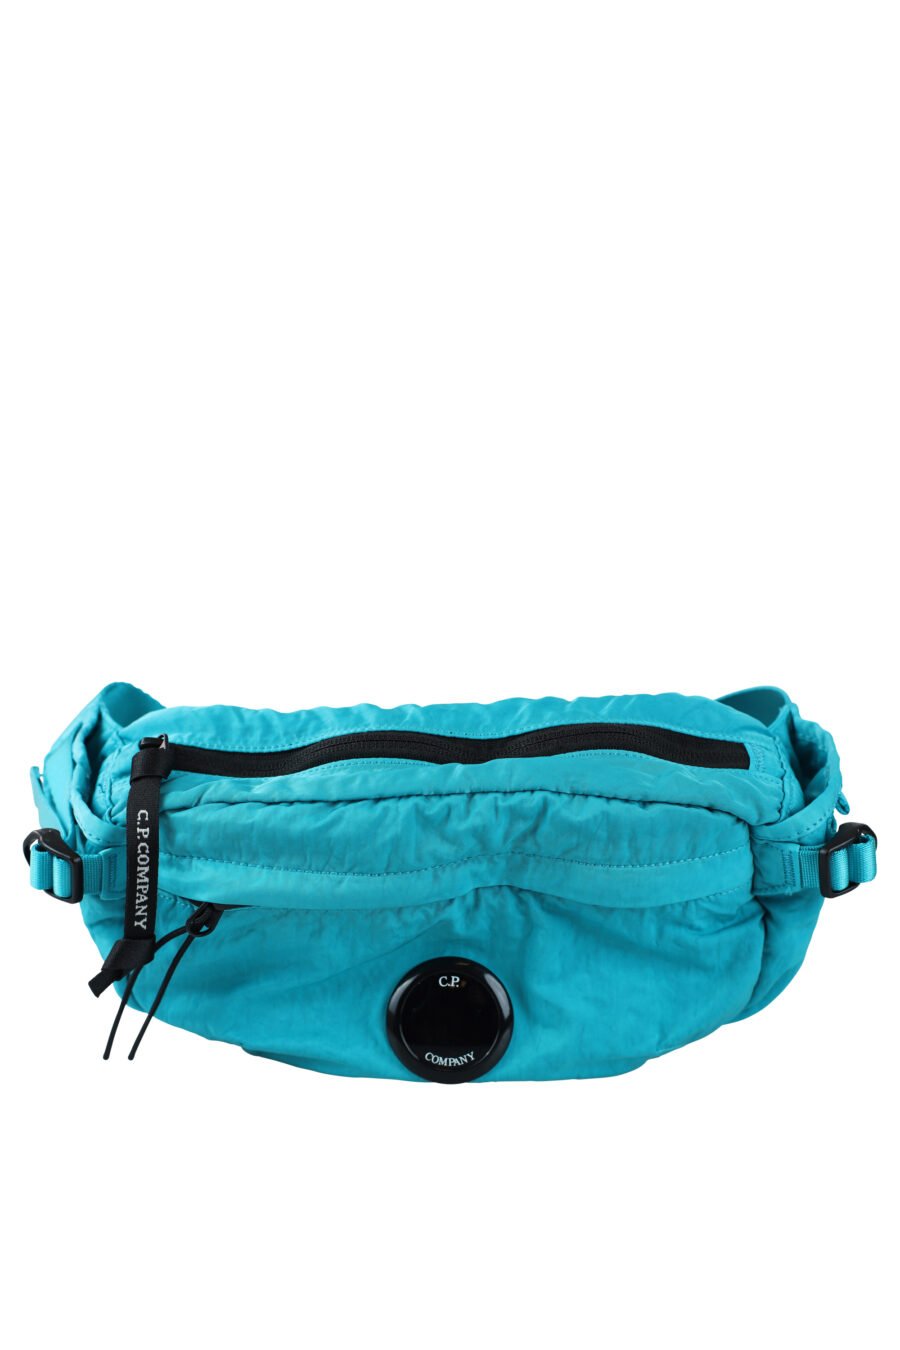 Turquoise blue bum bag with circular mini logo - IMG 4597